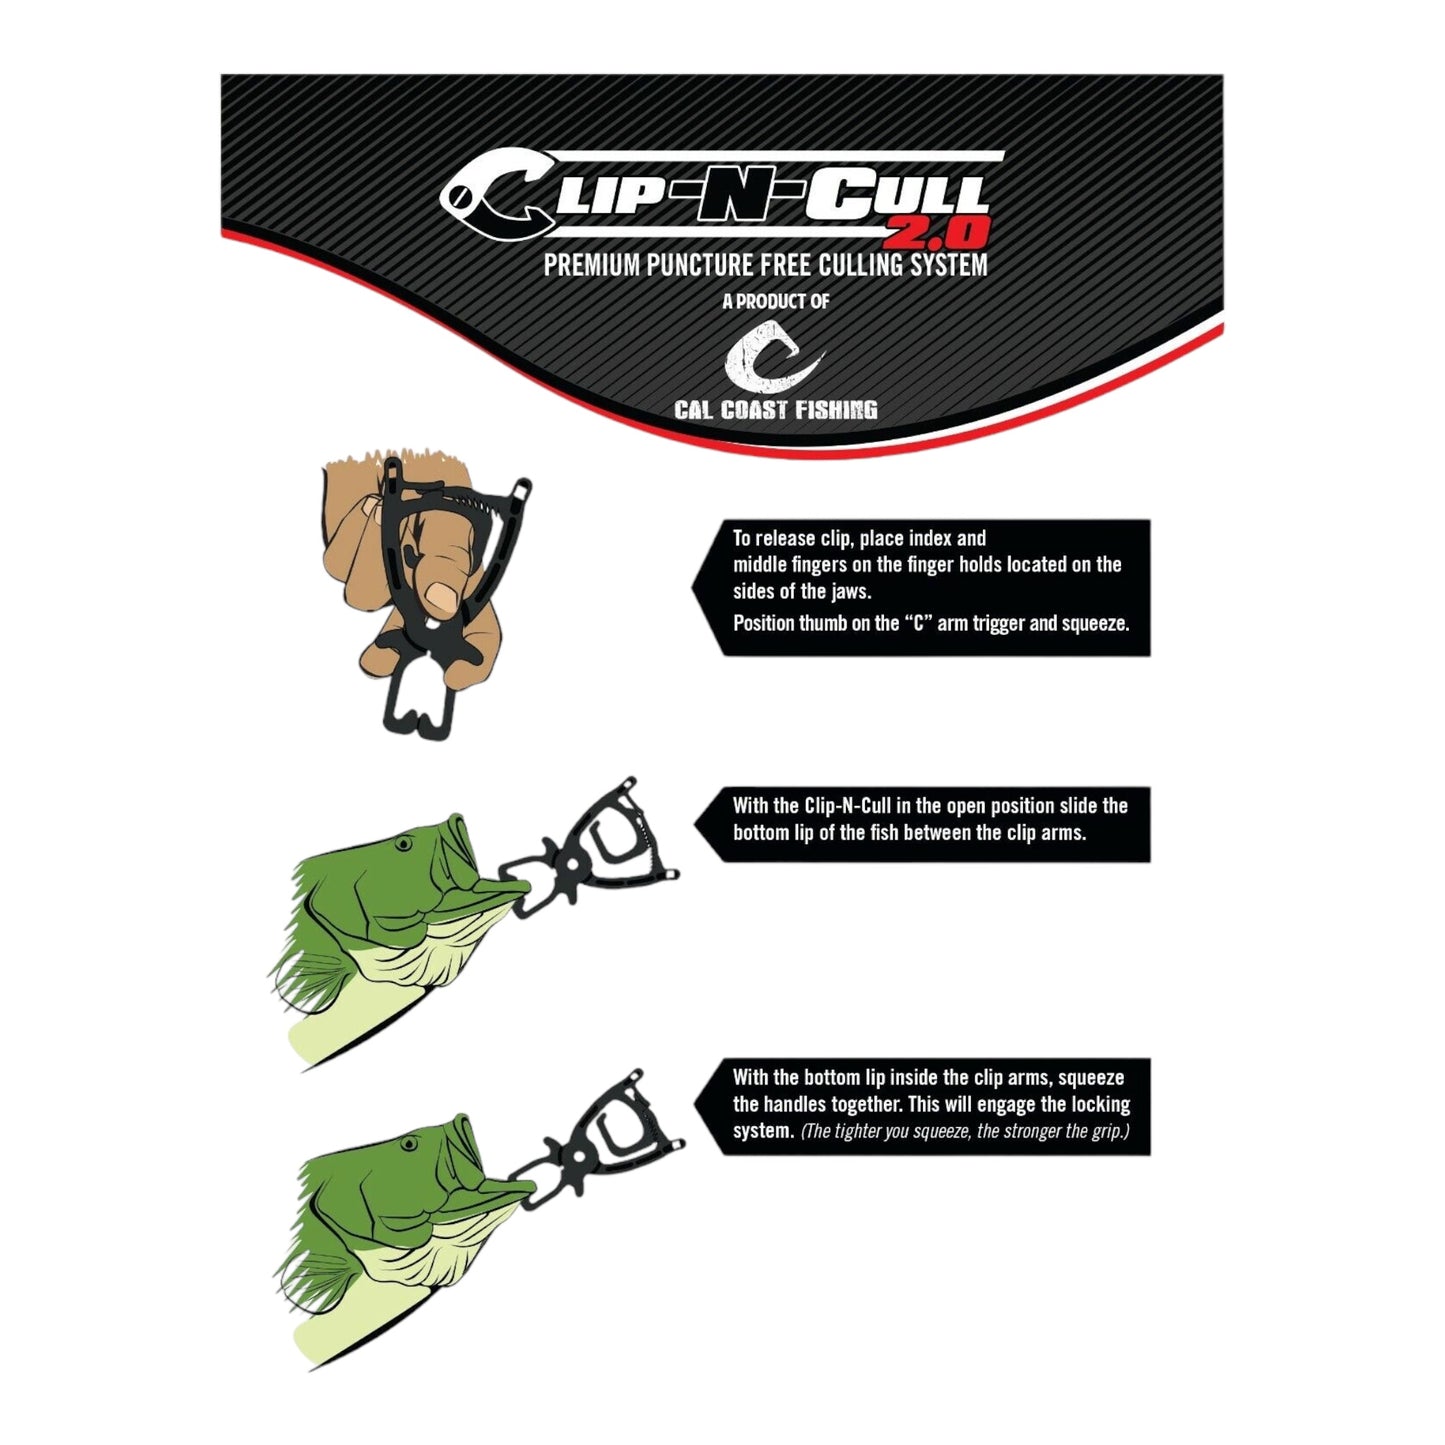 Cal Coast Clip N Cull 2.0 Premium Puncture Free Culling System